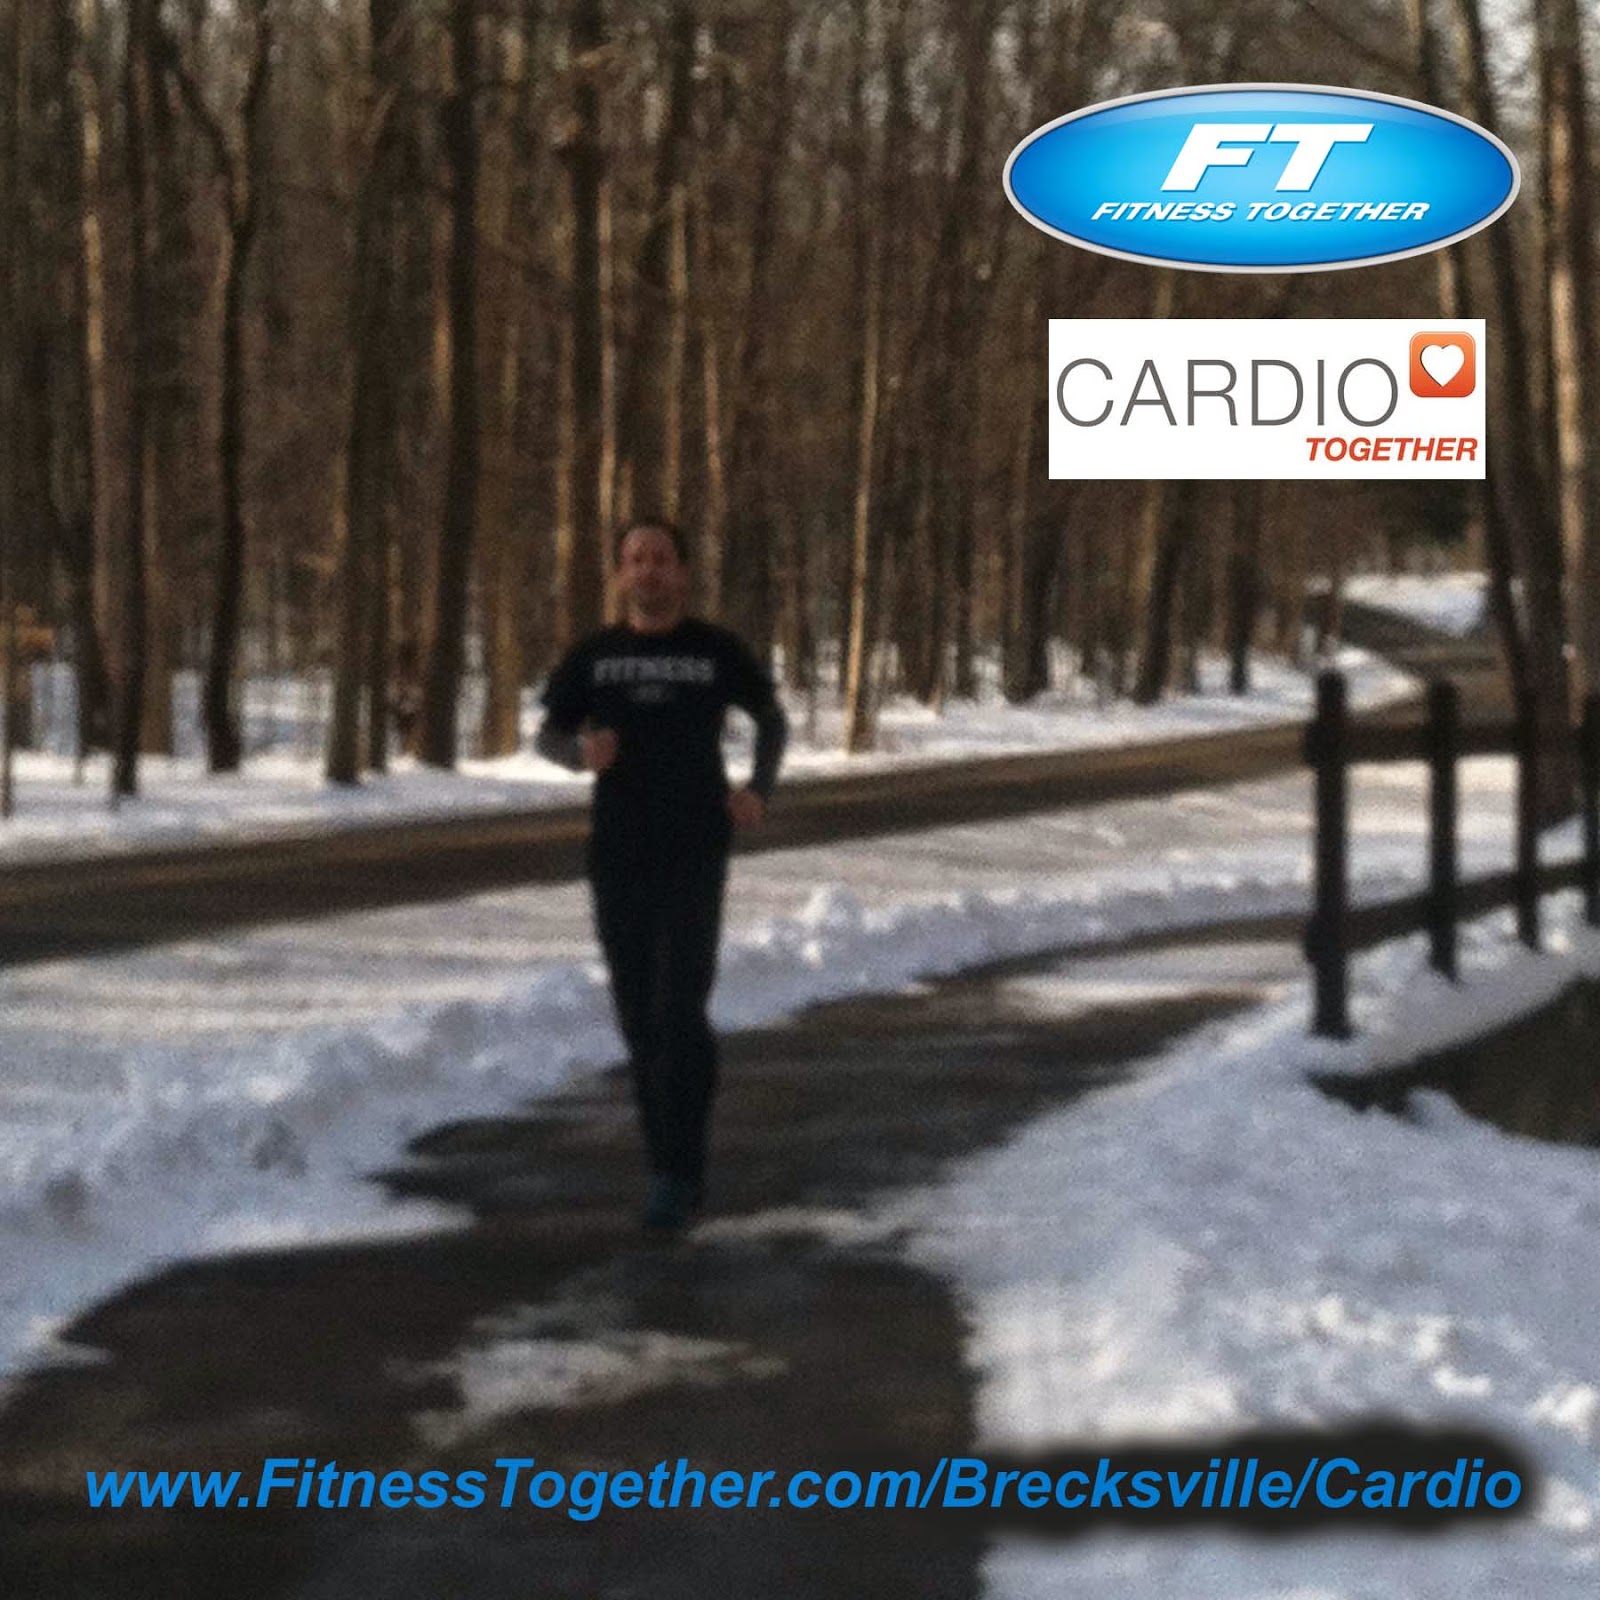 http://www.fitnesstogether.com/brecksville/cardio